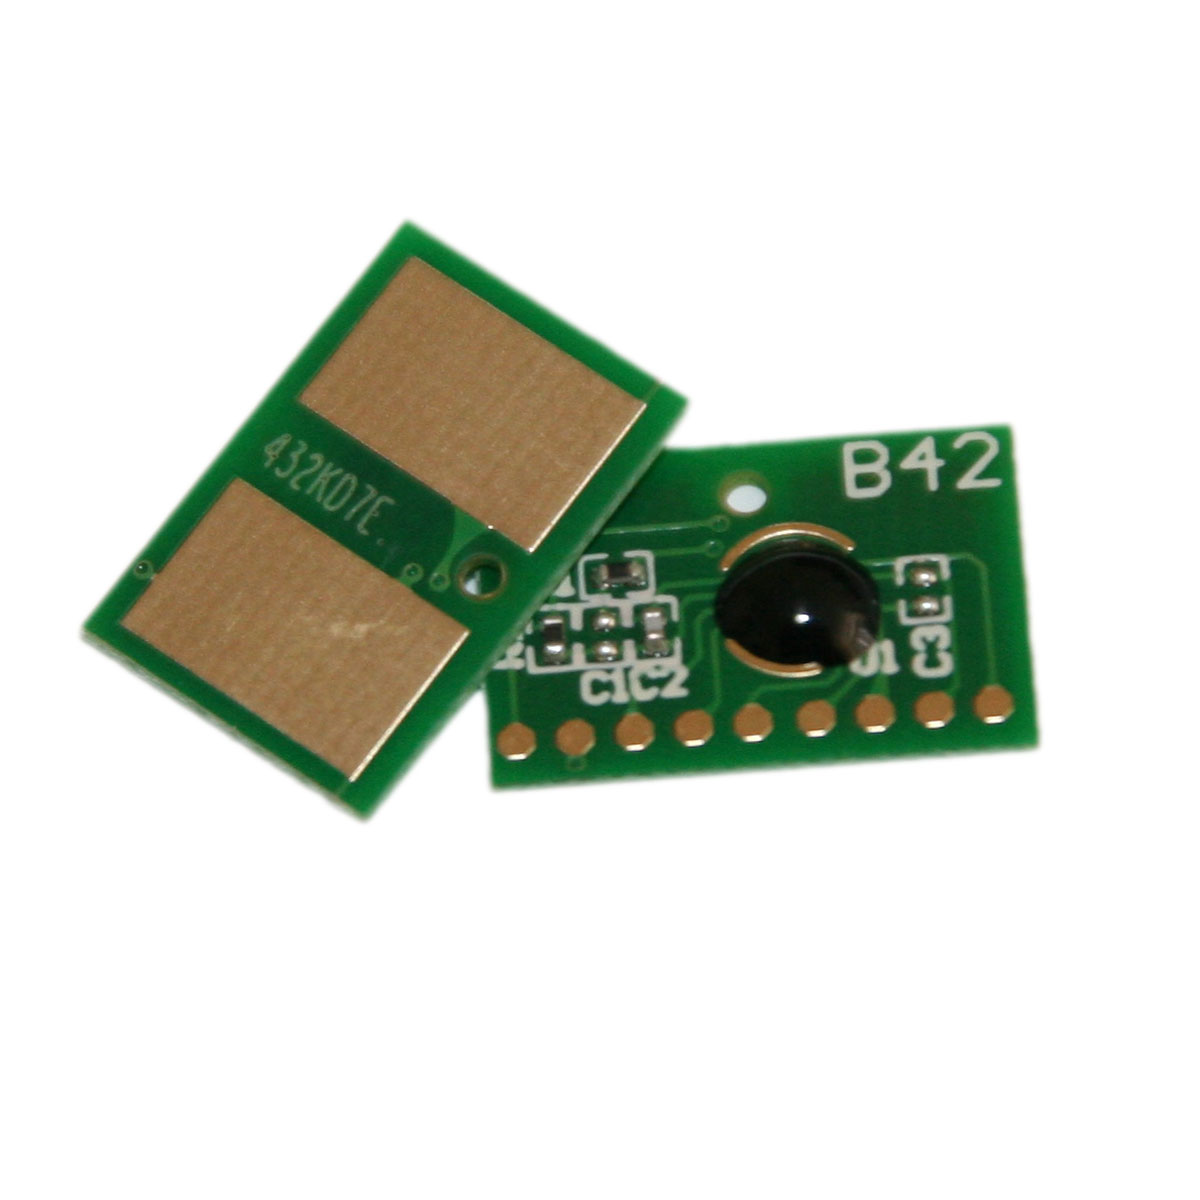 Counter chip OKI B 432